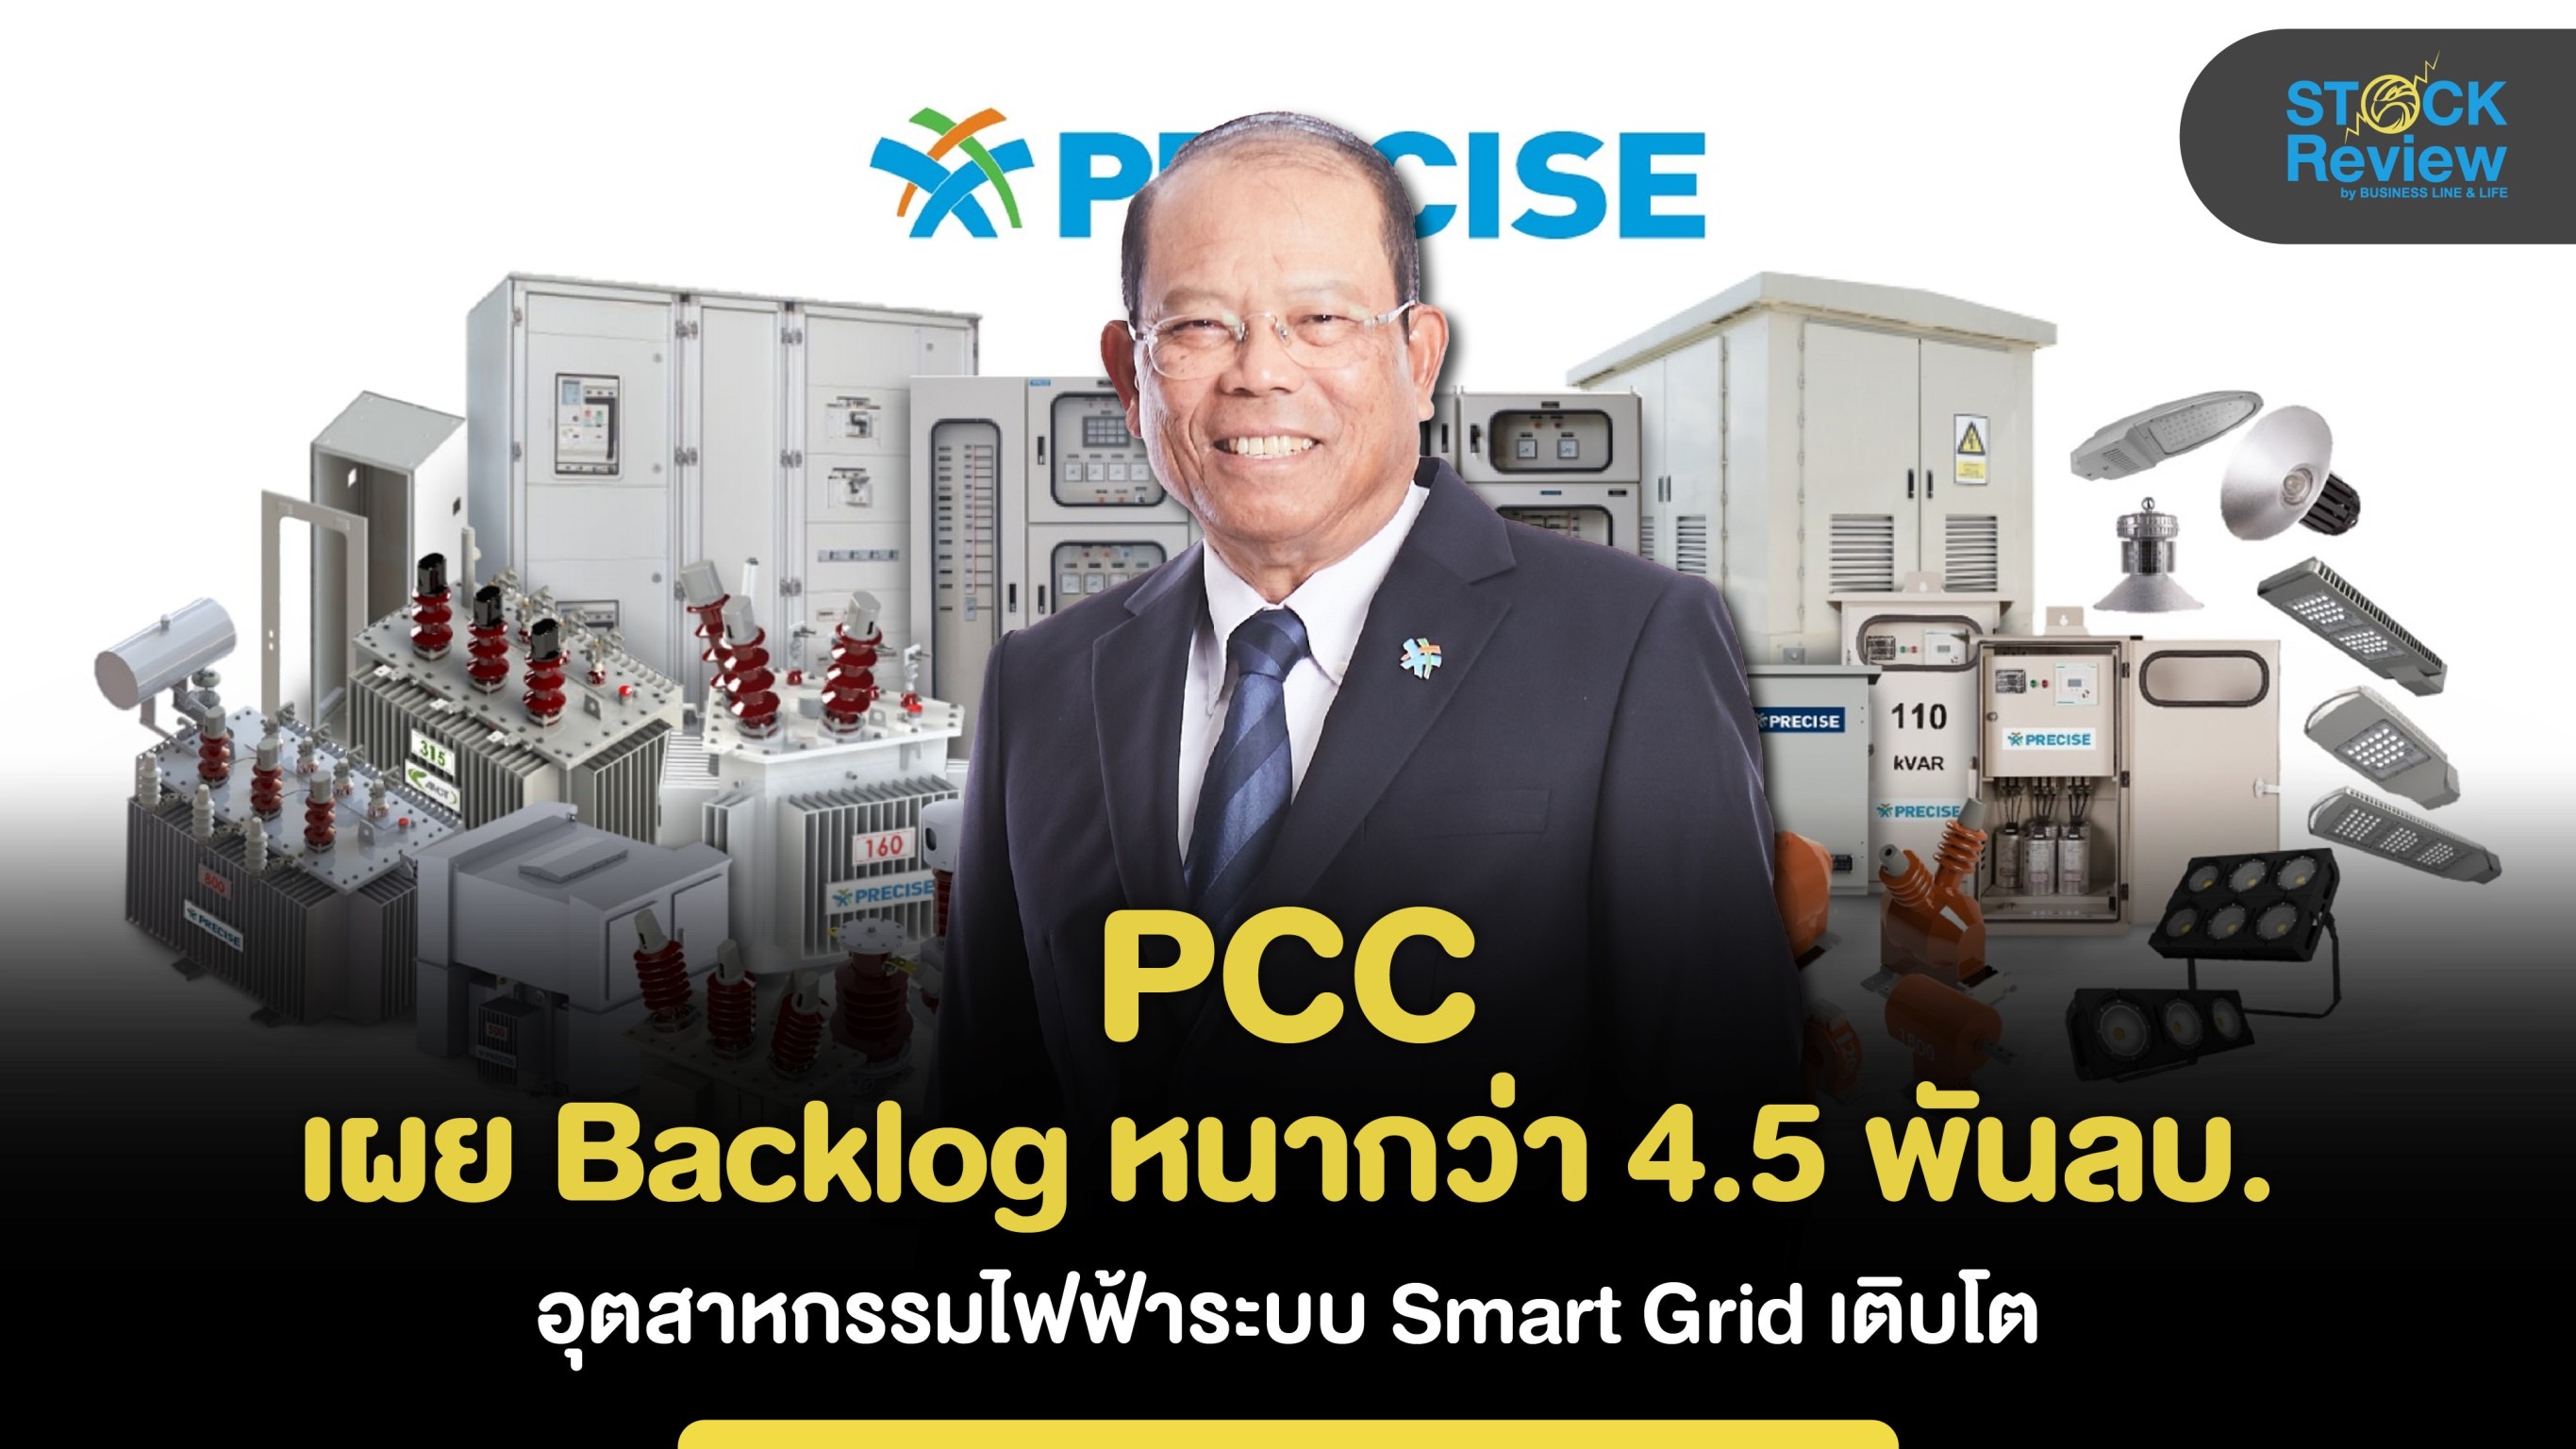 PCC  เผย Backlog หนากว่า 4.5 พันลบ. อุตสาหกรรมไฟฟ้าระบบ Smart Grid เติบโต